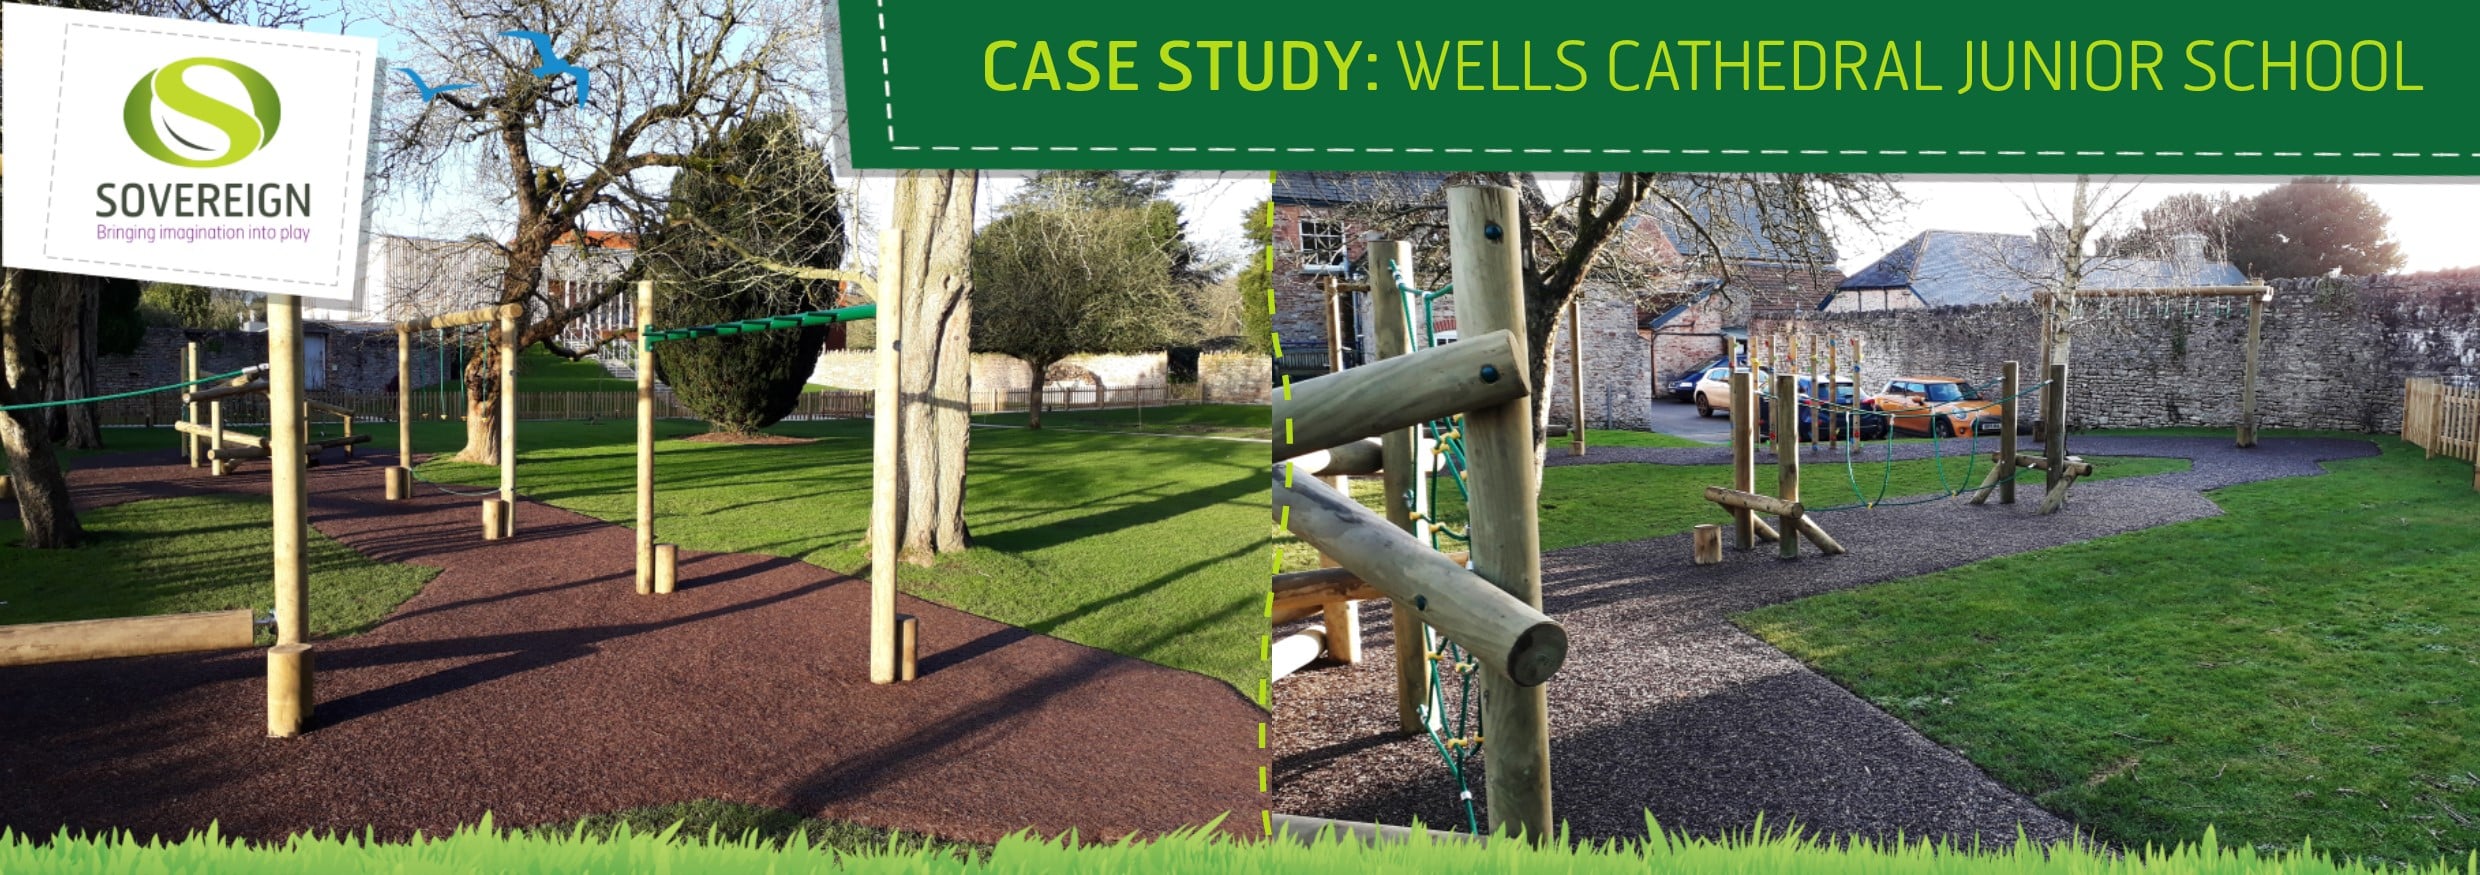 Case Study: Wells Cathedral Junior School